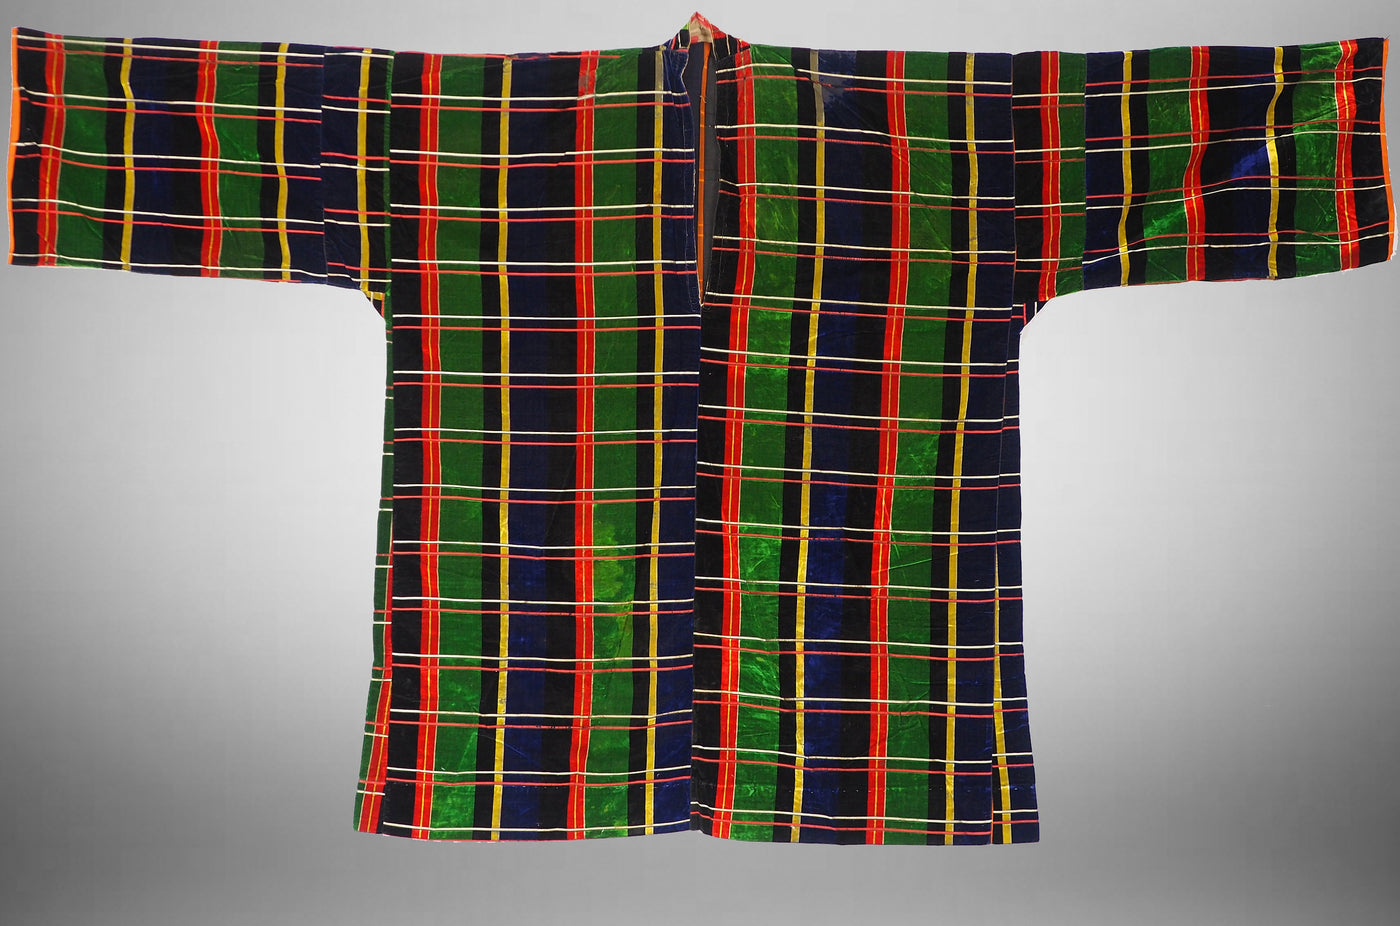 antik Orient Uzbekische Nomaden frauen seide Ikat Samt Kleid  khalat afghan uzbek kleid afghanistan Tracht kostüm Chapan  Nr-21/10  Orientsbazar   